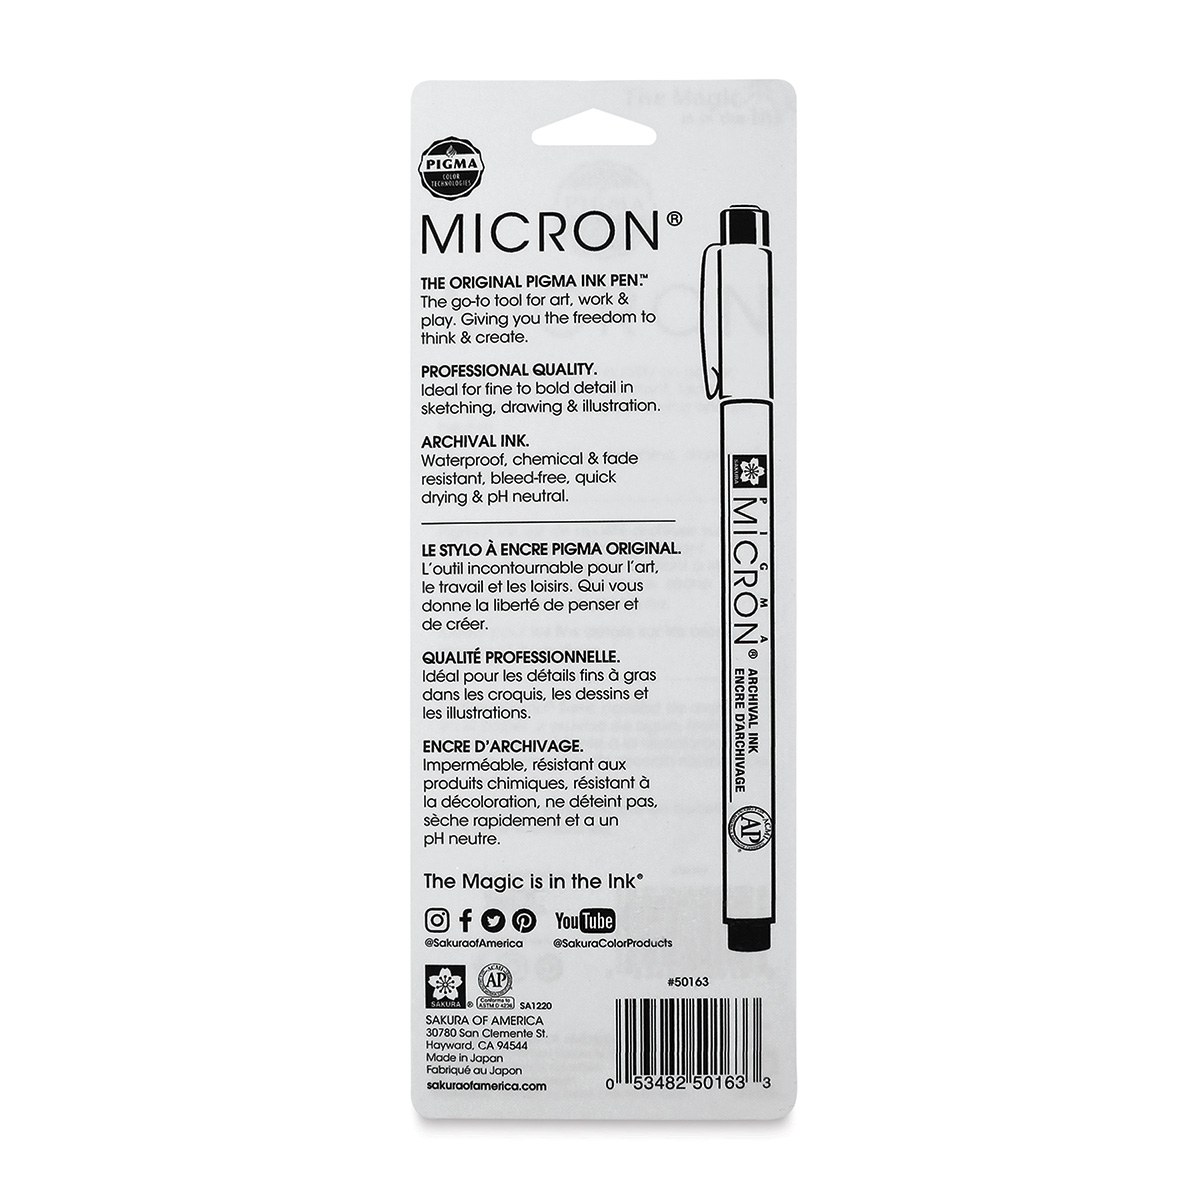 Sakura Pigma Micron Pens - Set of 10, Grays and Black